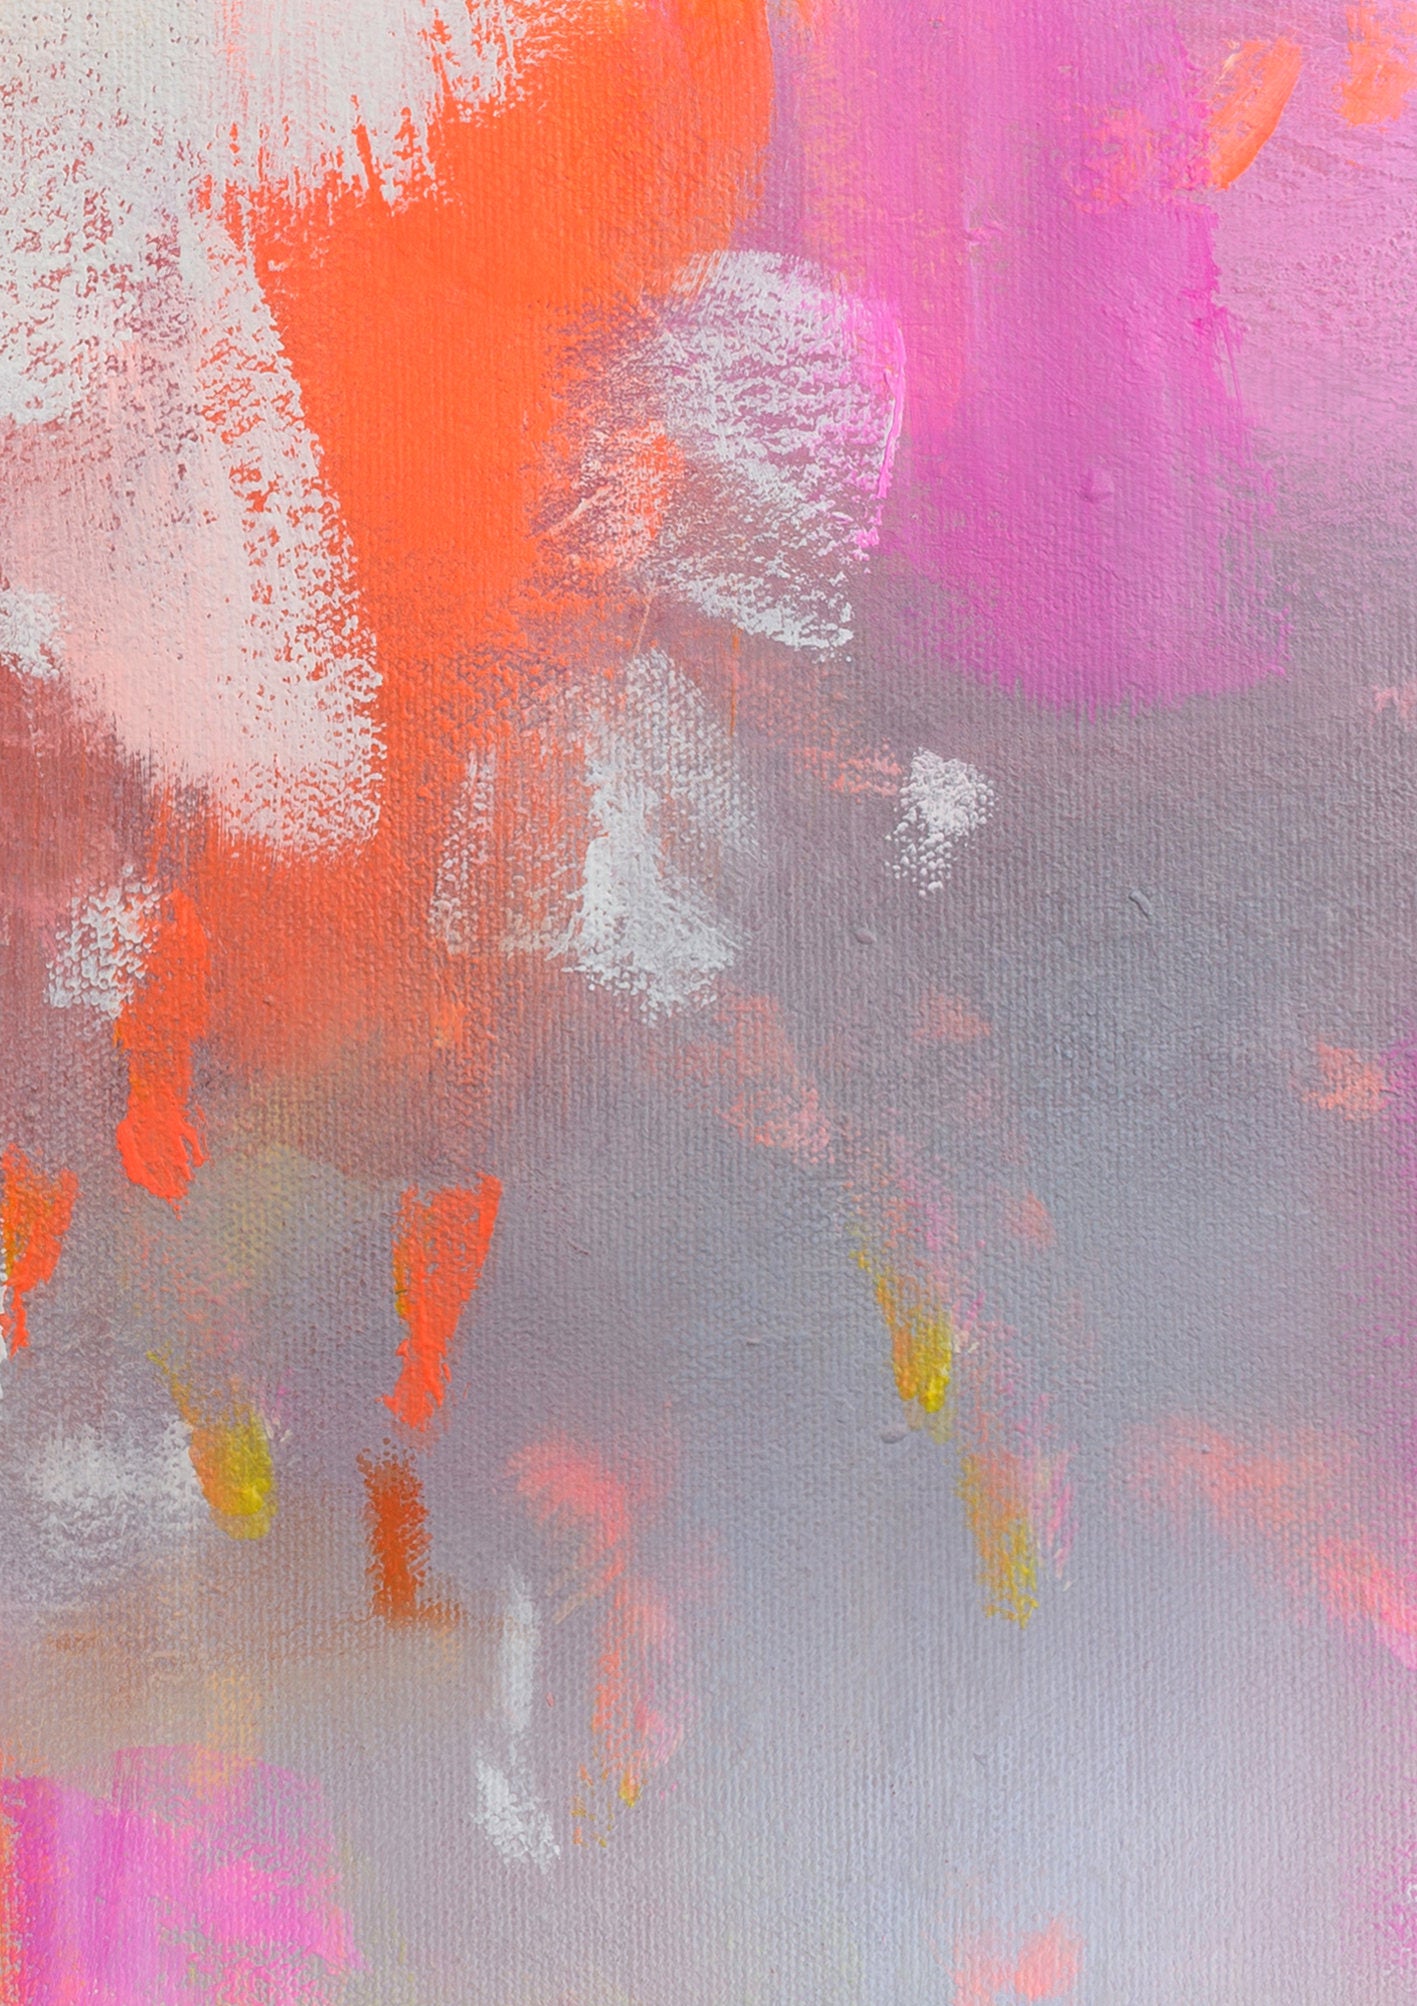 Large wall art giclee print, orange pink geometric abstract painting, large abstract painting print, giclee wall art by Camilo Mattis - camilomattis.com